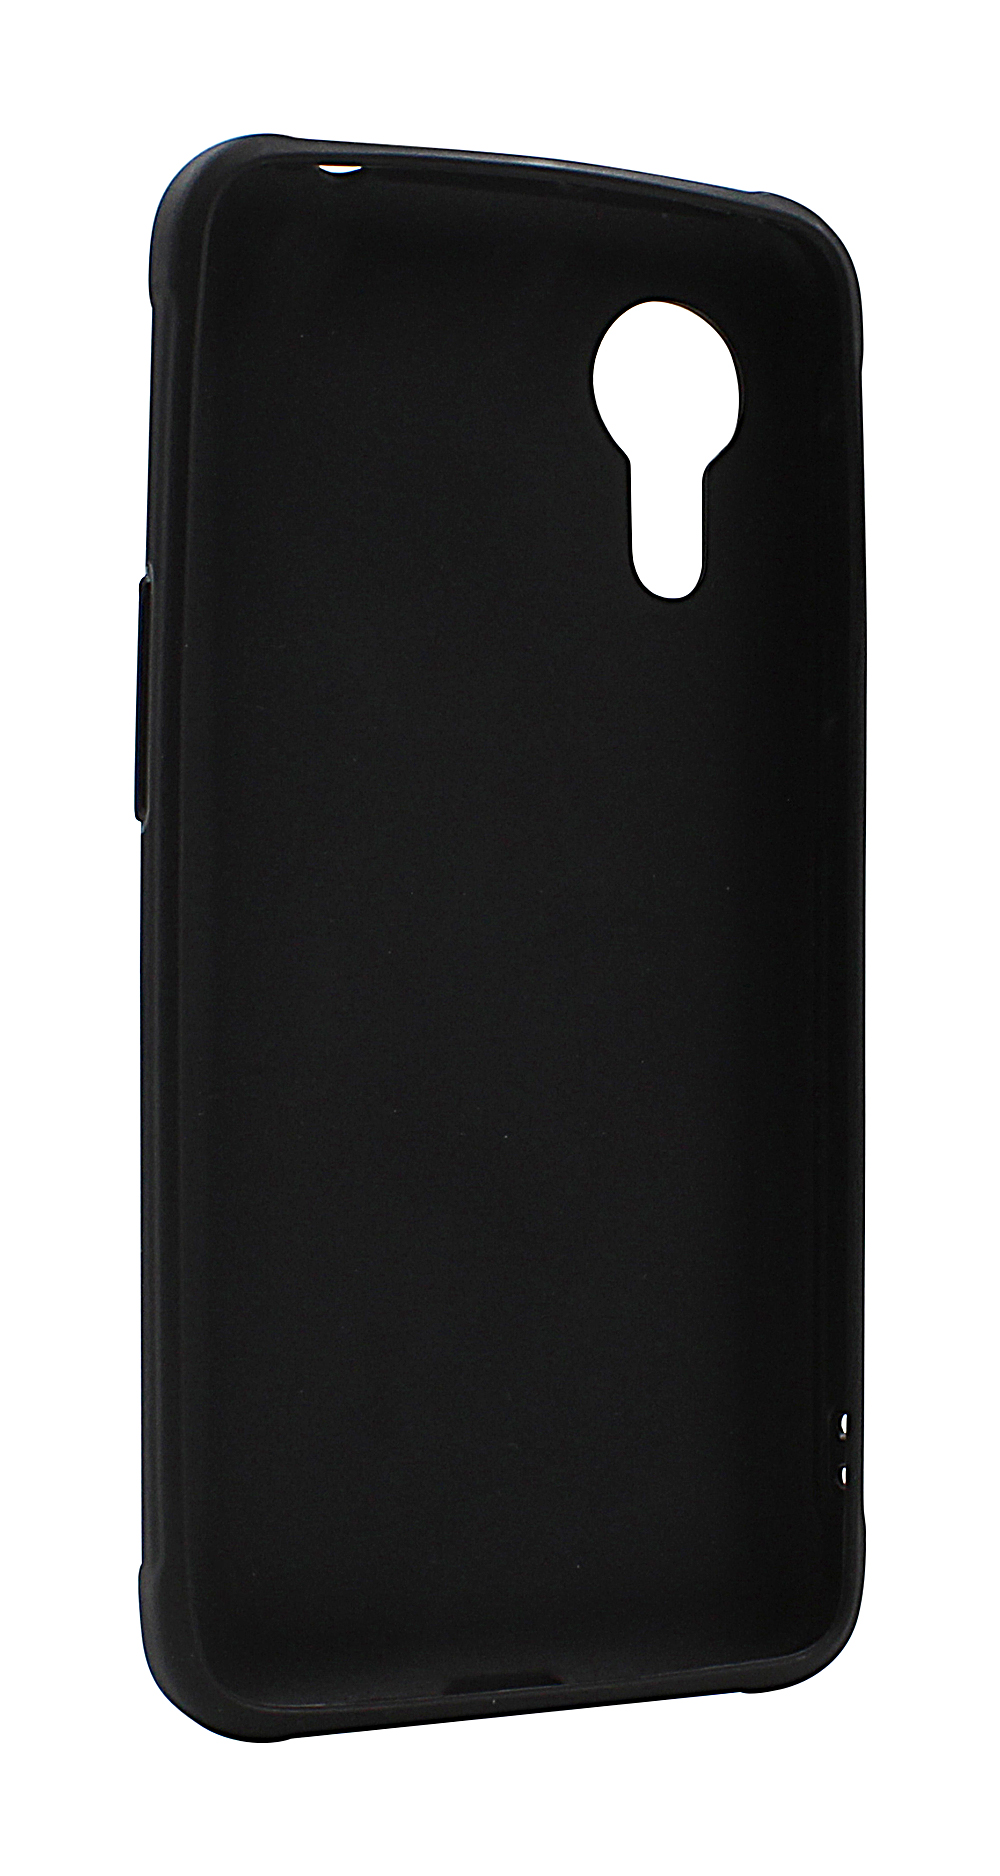 CoverInSkimblocker XL Magnet Fodral Samsung Galaxy Xcover 5 (SM-G525F)